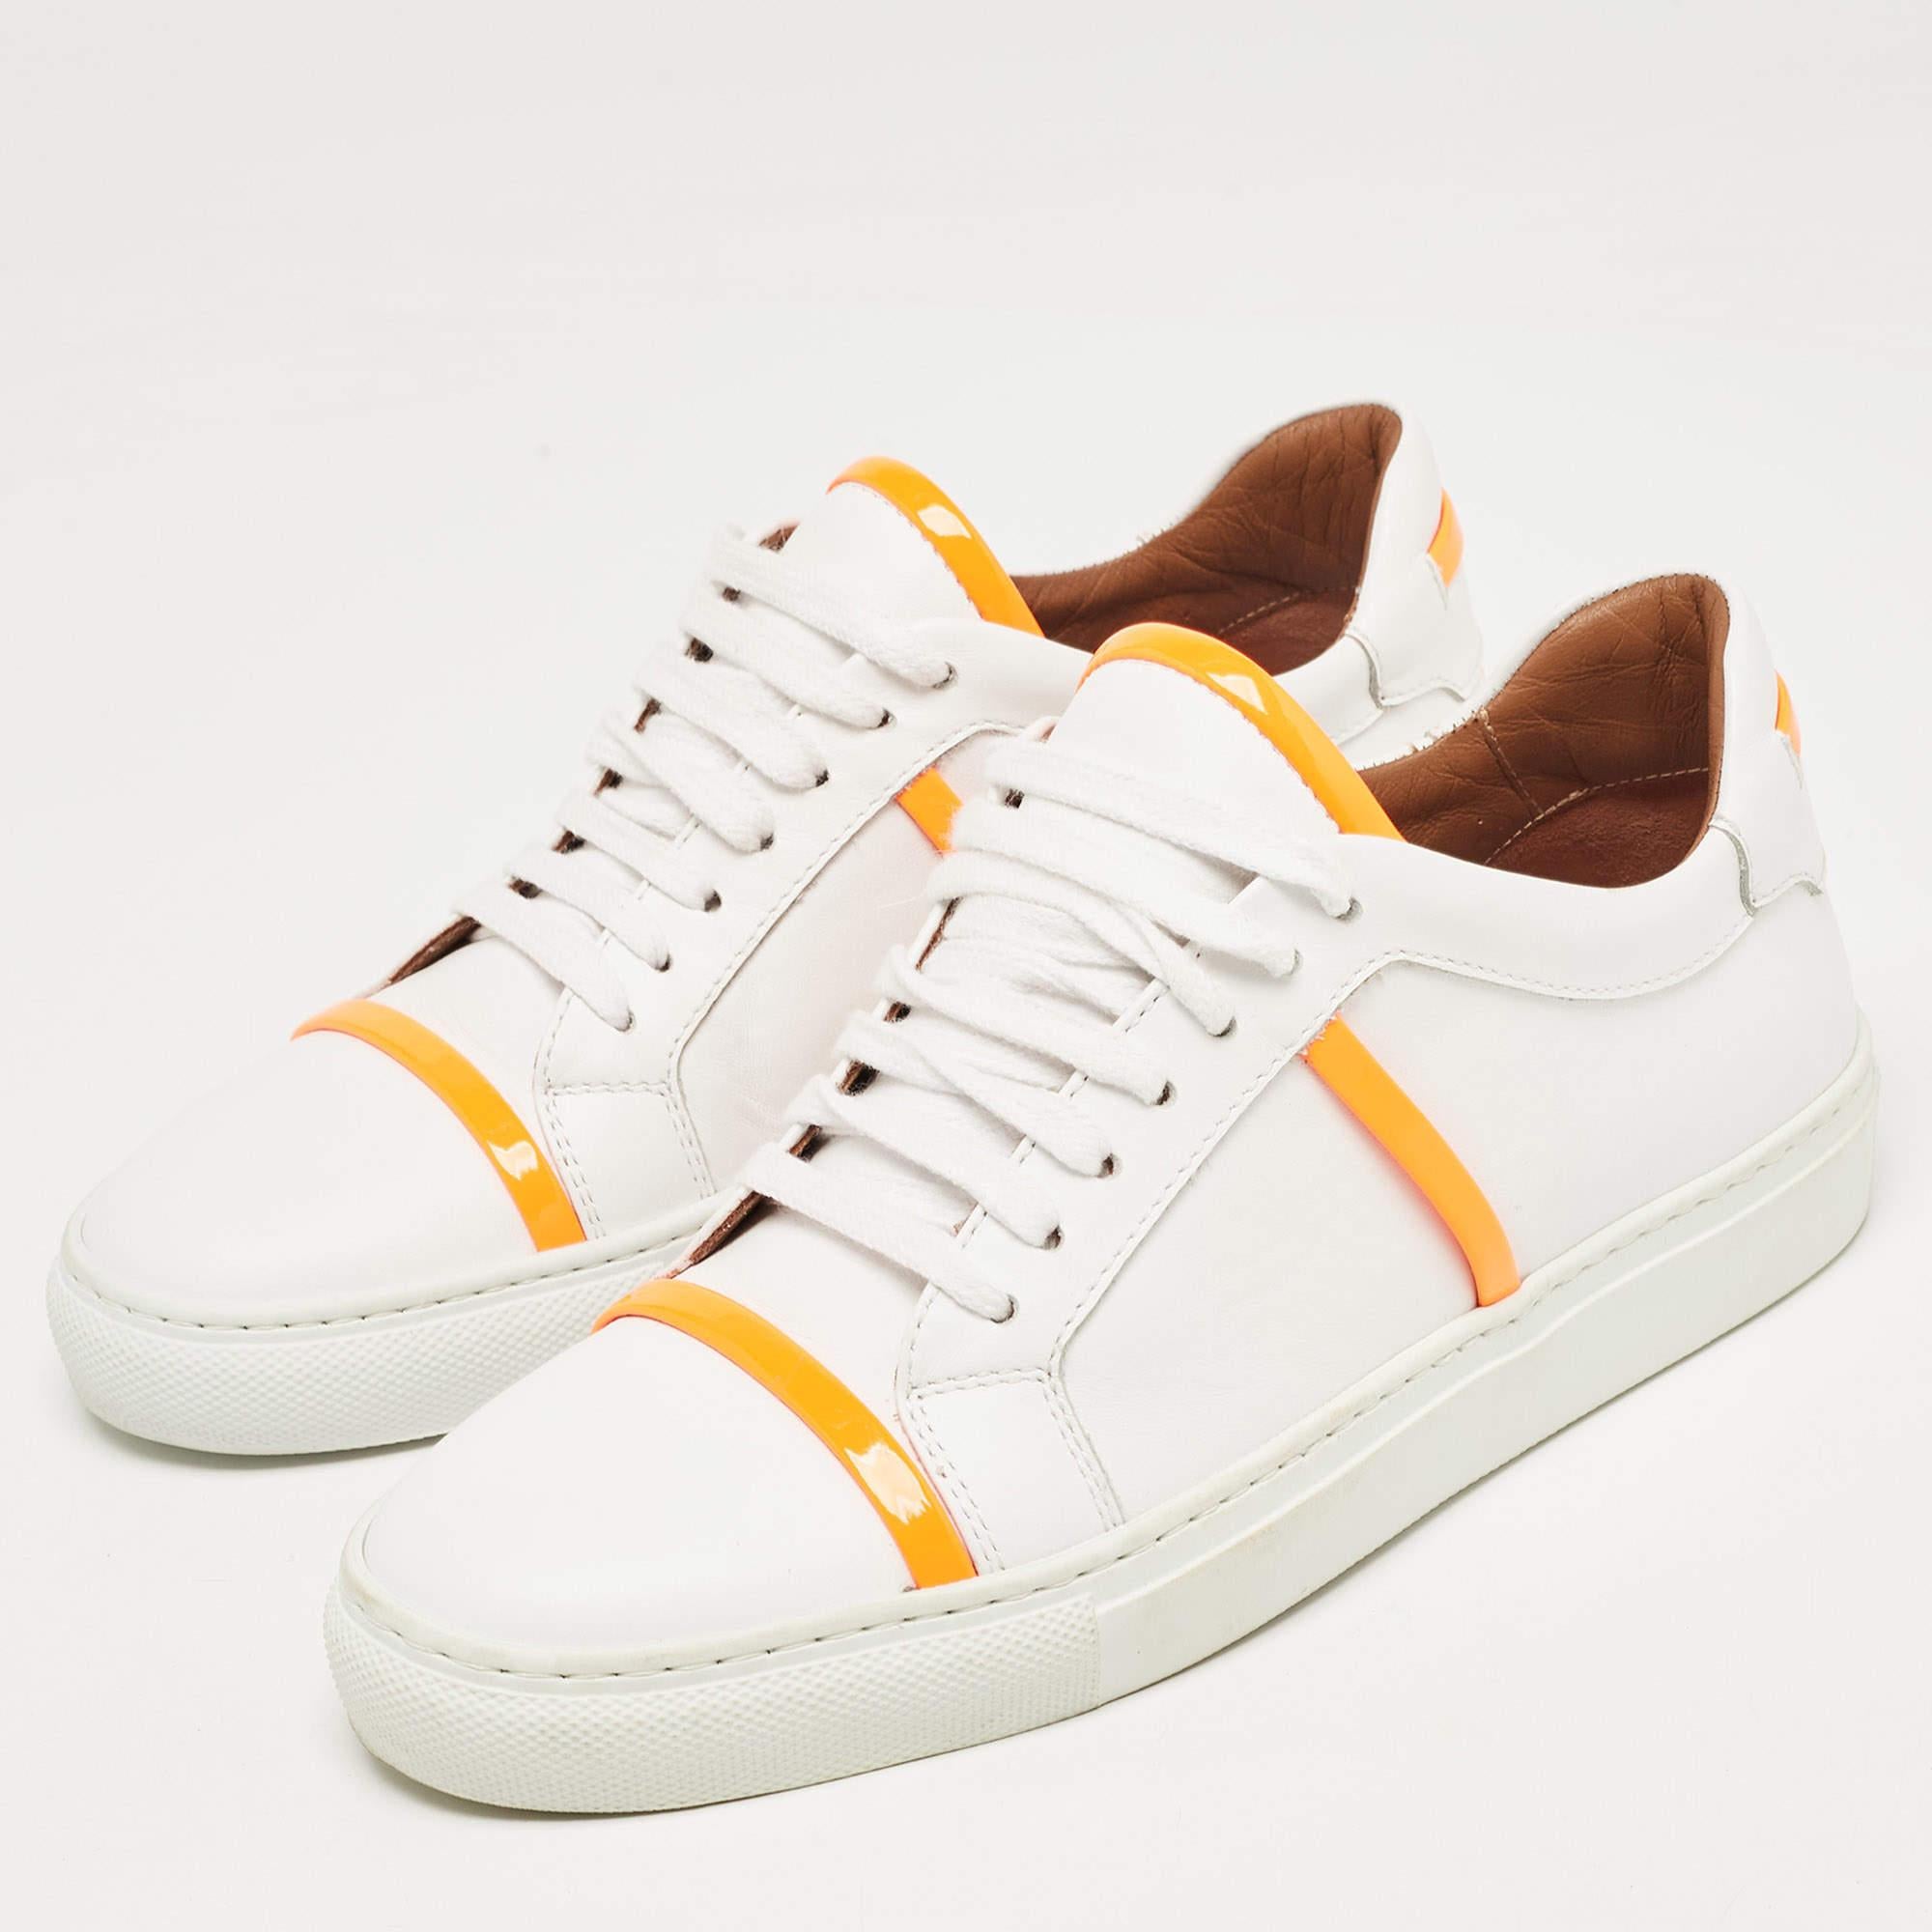 Malone Souliers White/Neon Orange Leather and Patent Deon Sneakers Size 37 In Excellent Condition For Sale In Dubai, Al Qouz 2